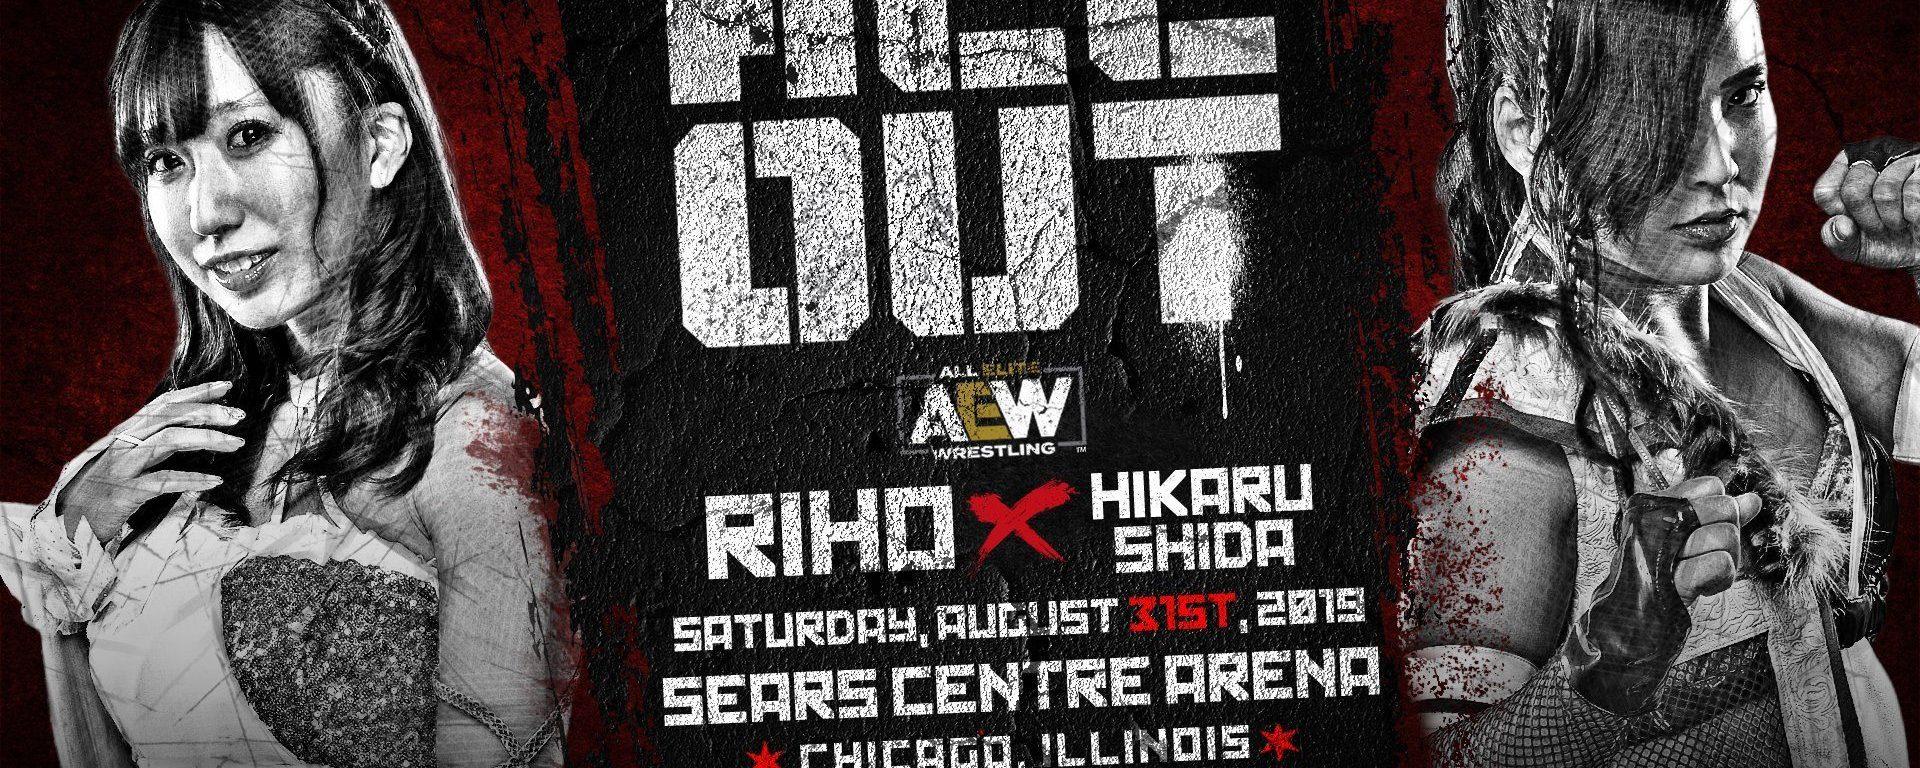 Riho vs. Hikaru Shida announced for AEW All Out To Belles